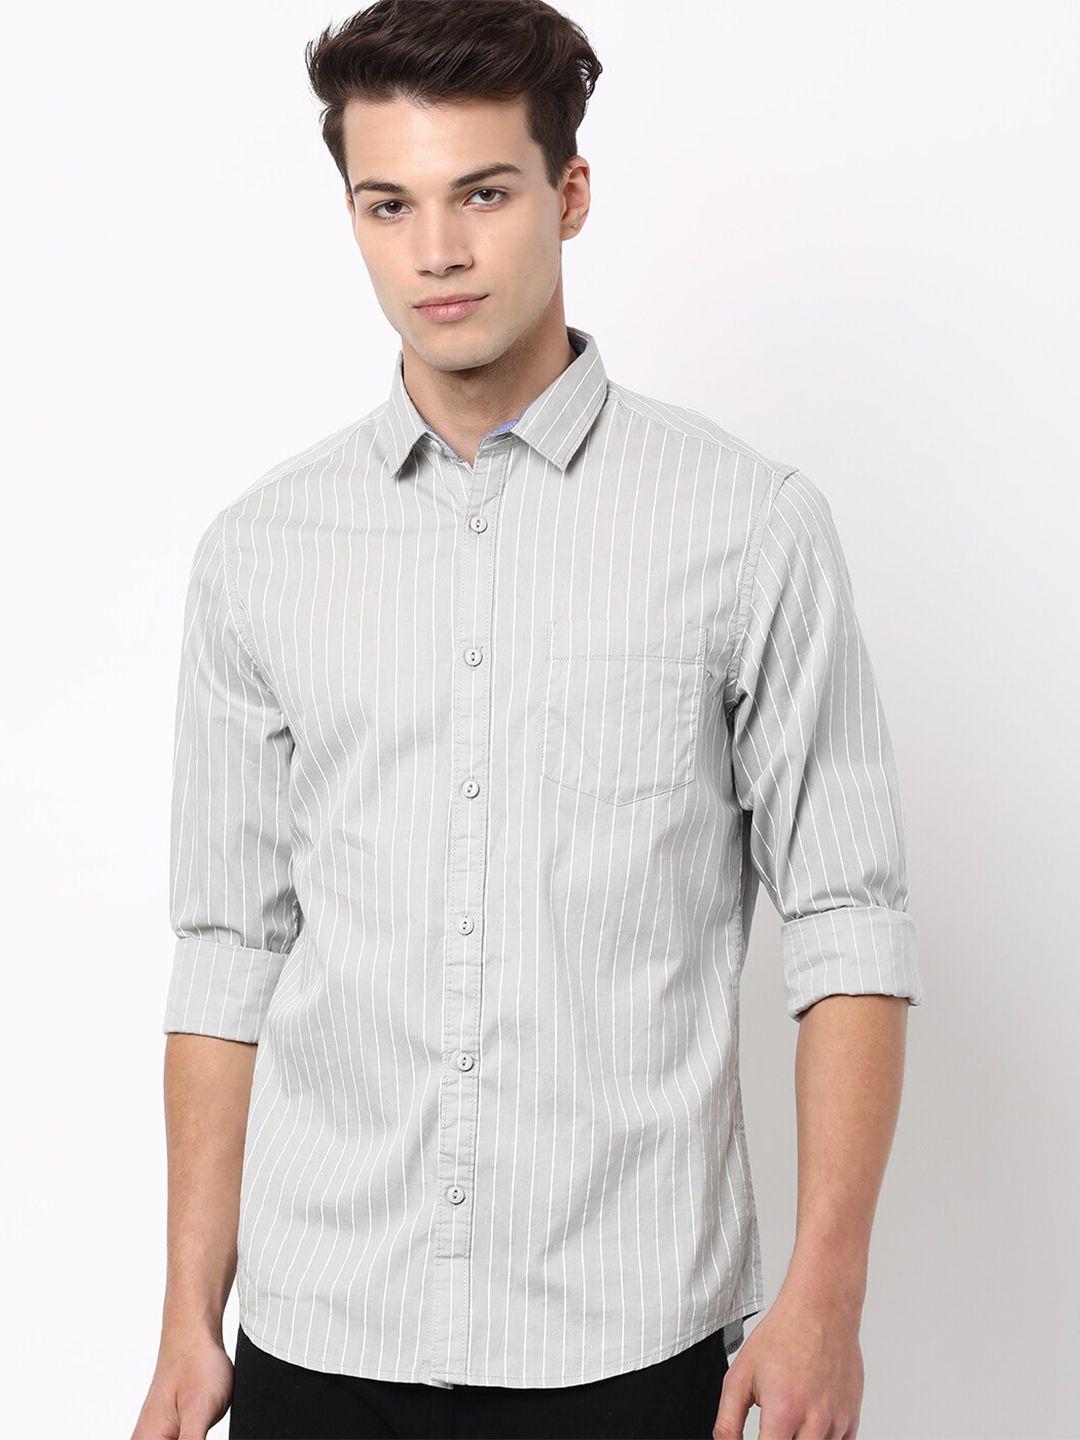 hardsoda vertical stripes cotton casual shirt